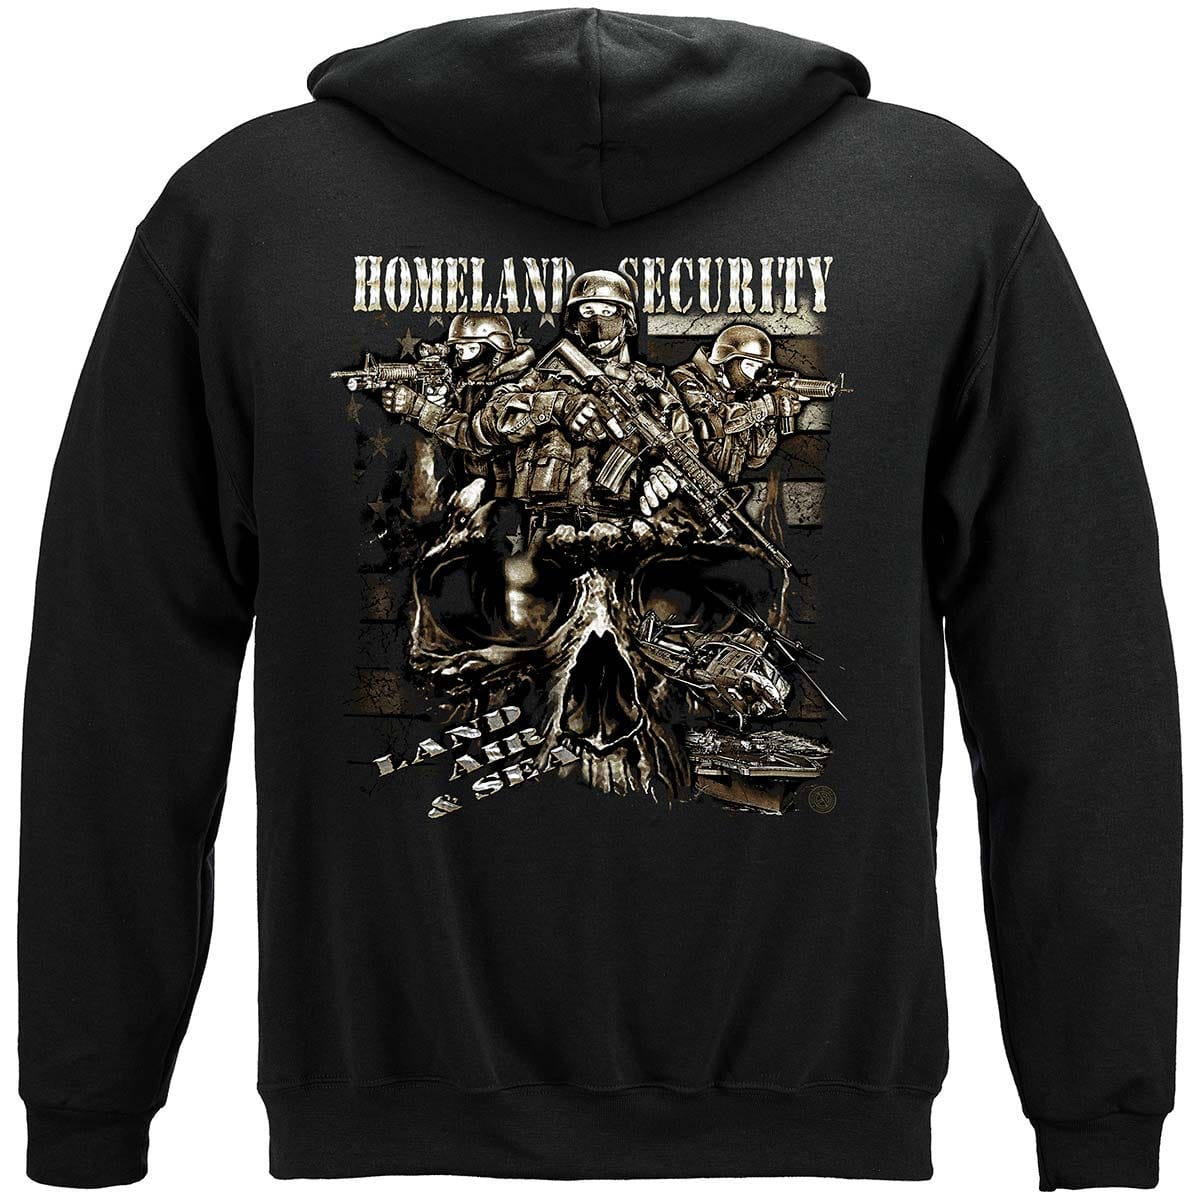 Homeland Security Land Air and Sea Premium Hooded Sweat Shirt